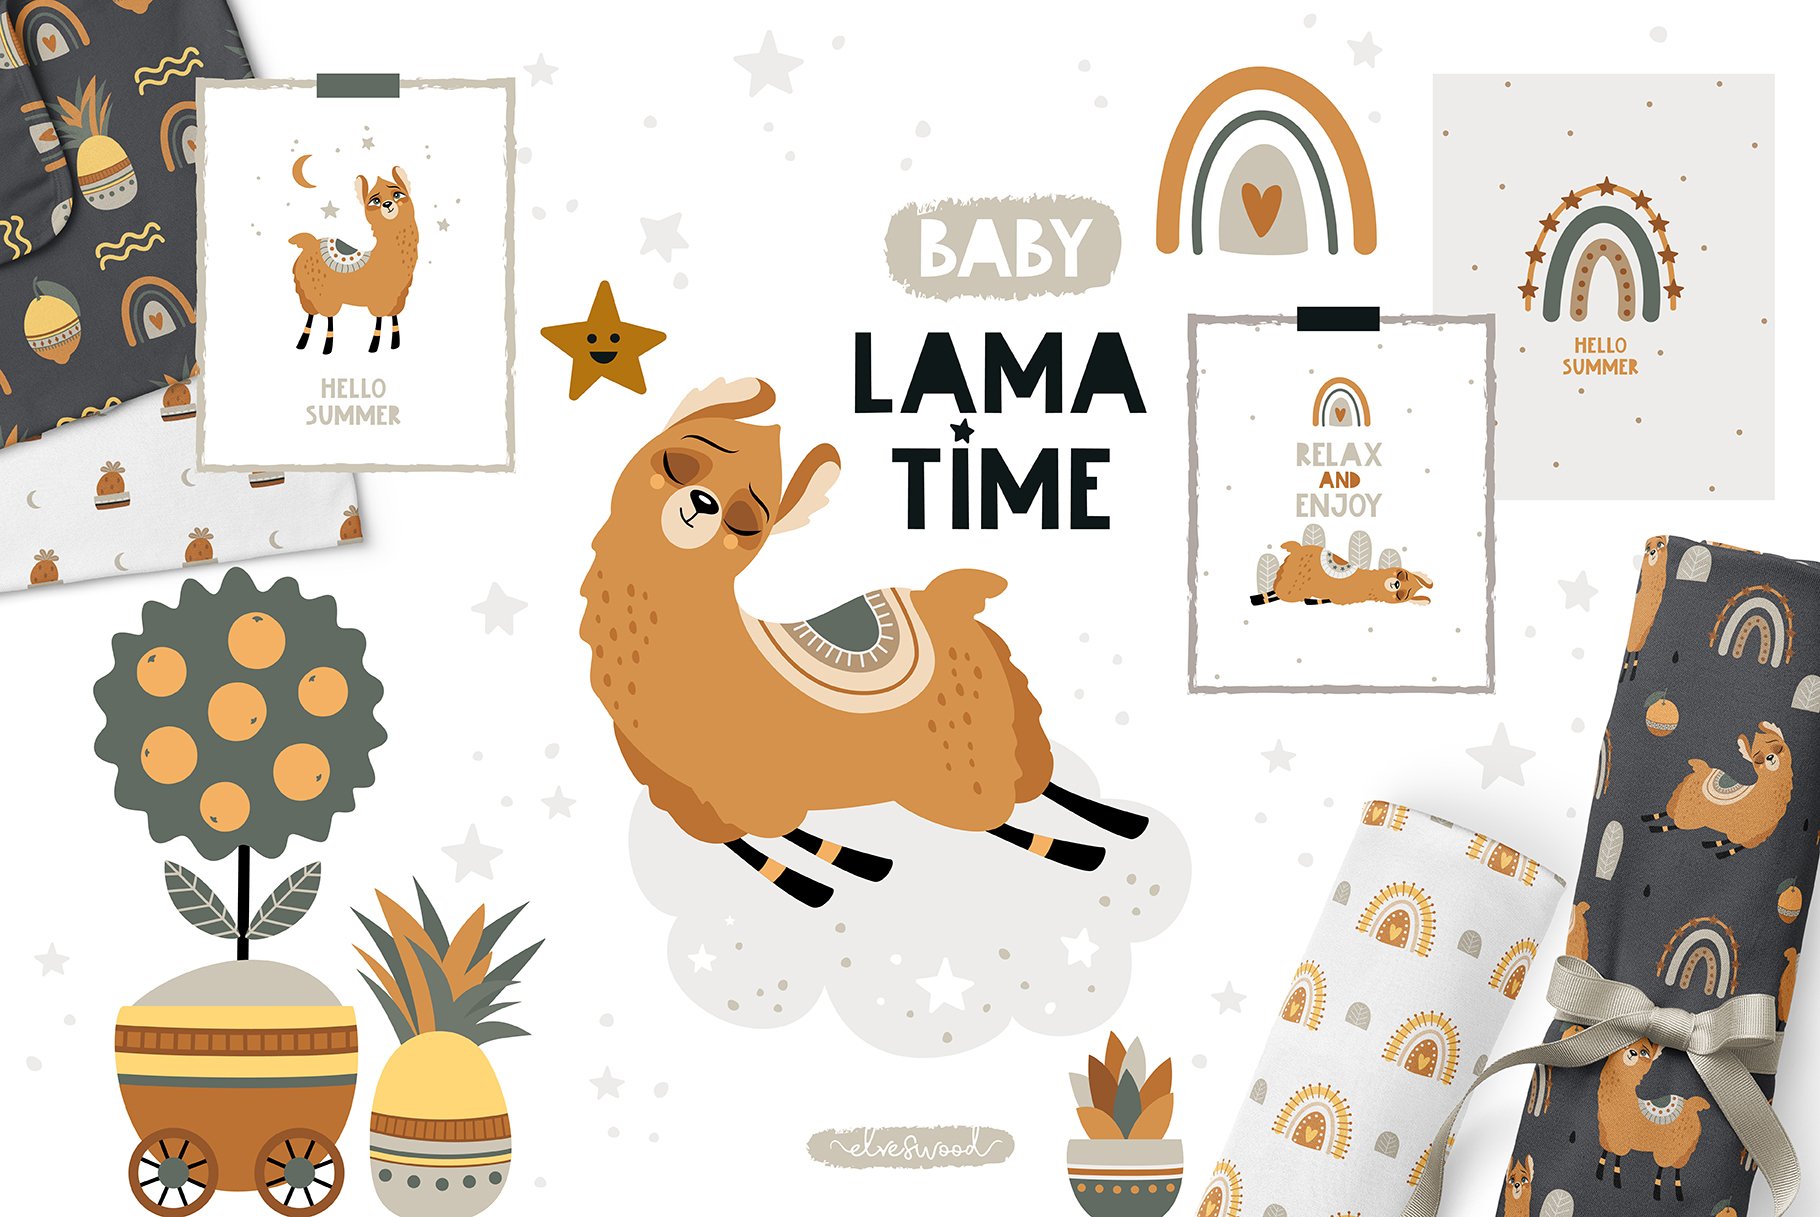 Lama time! cover image.